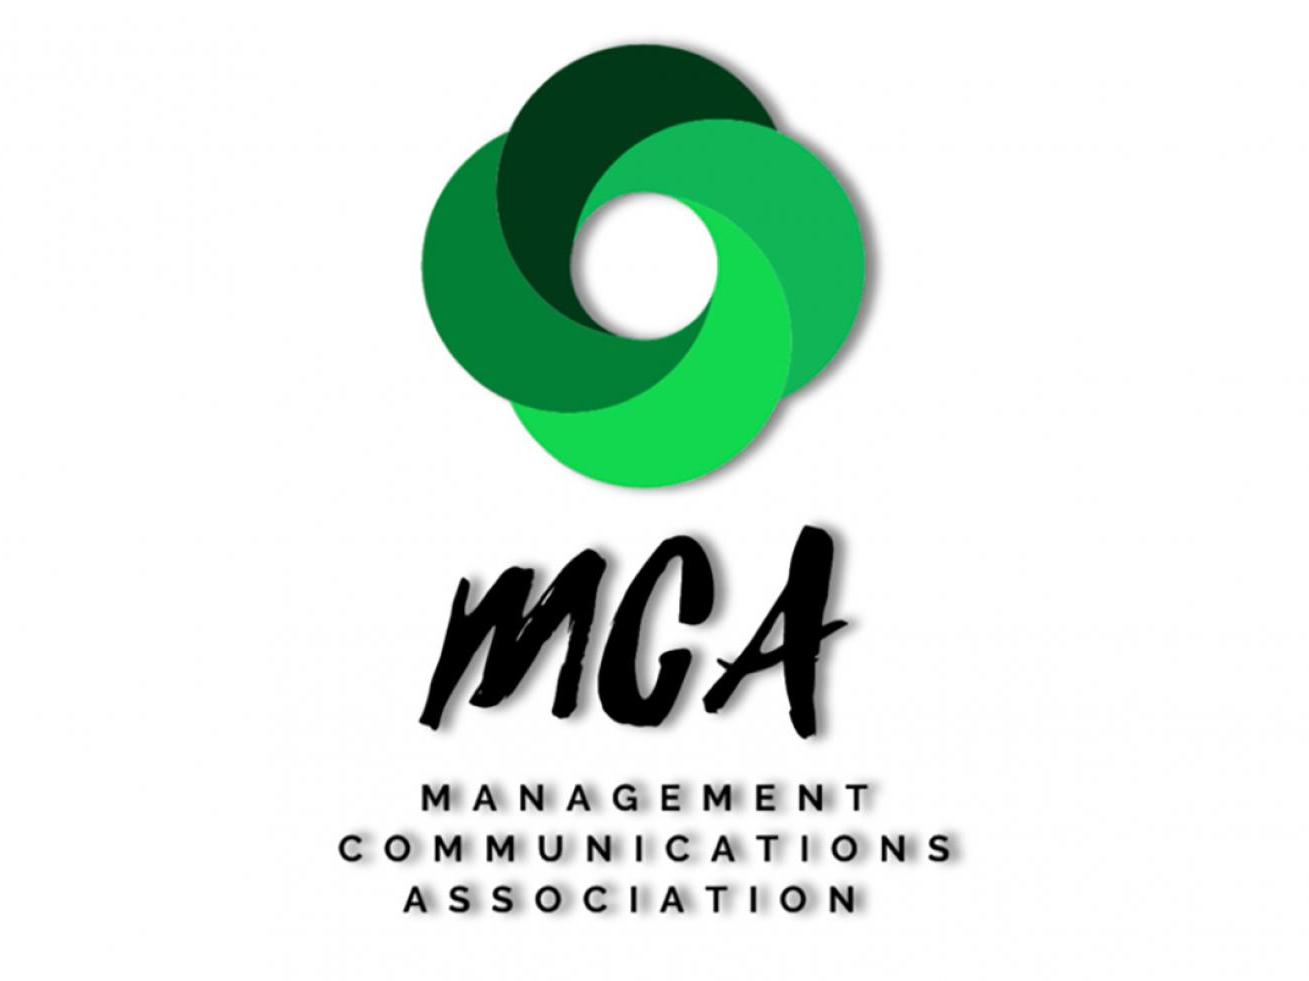  Management Communications Association logo